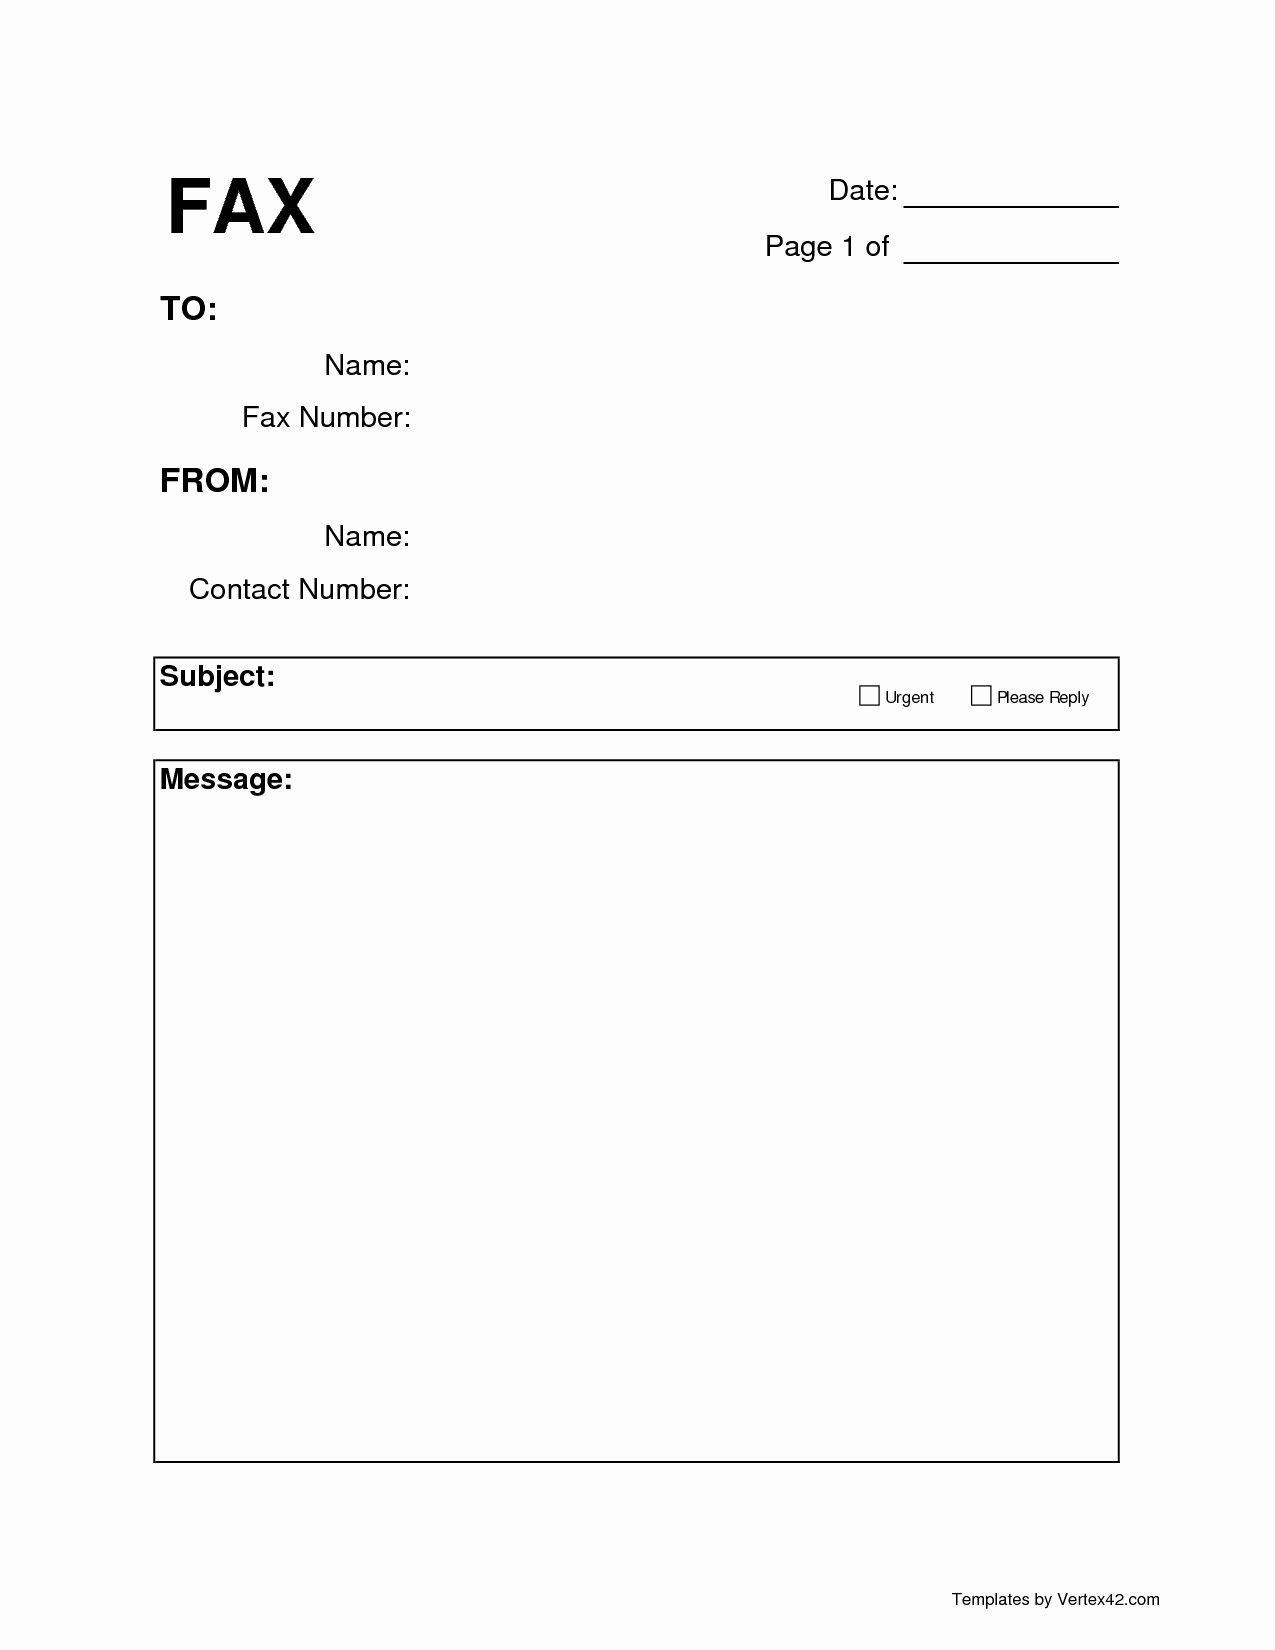 Fax Cover Sheet for Mac New Fax Cover Sheet Pdf Mac